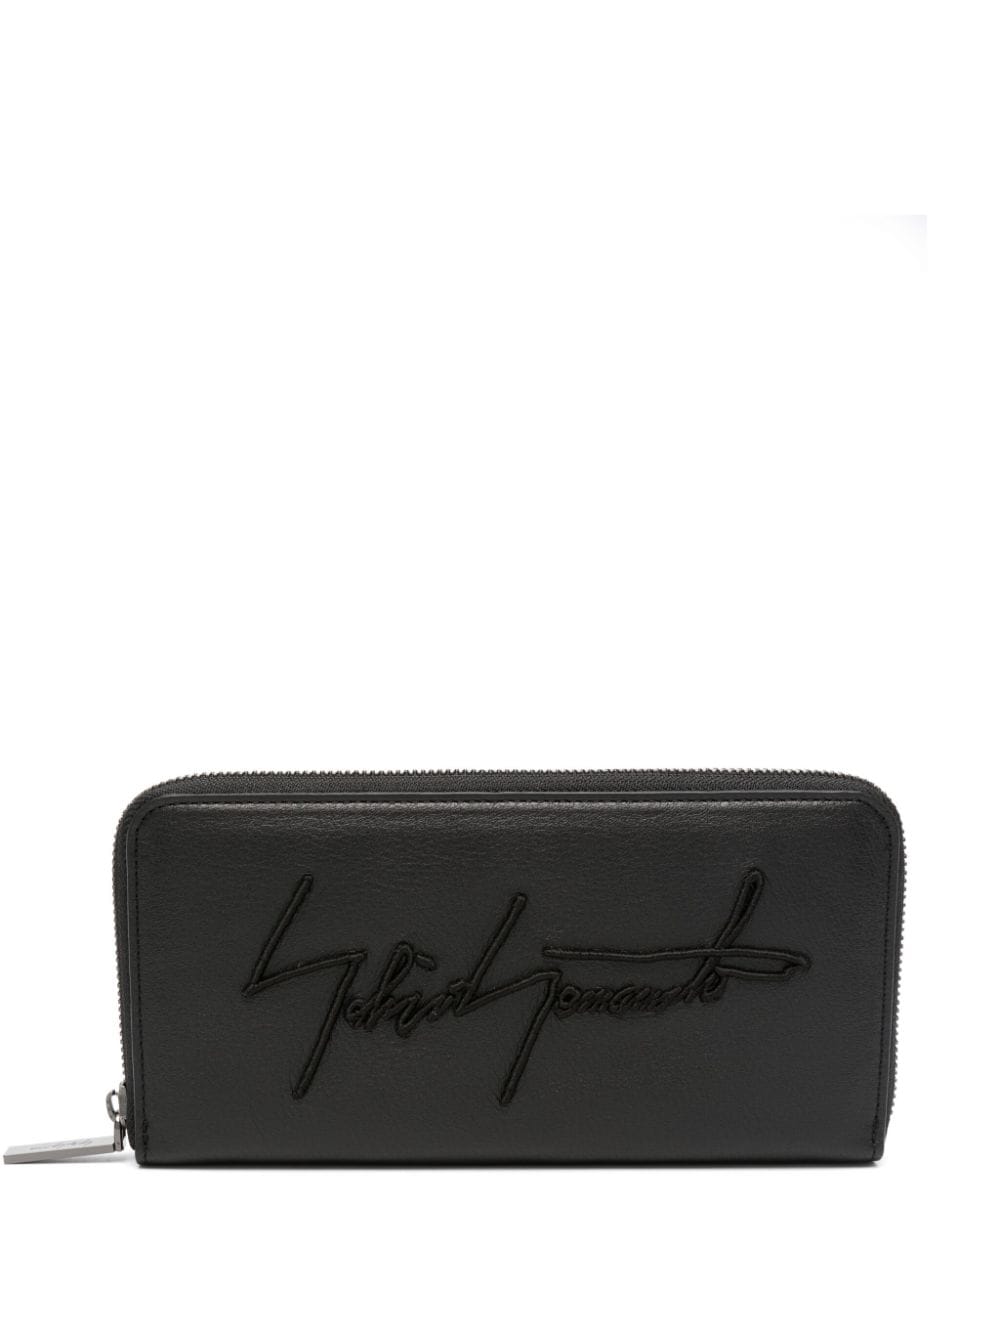 Discord Yohji Yamamoto logo-embossed leather wallet - Black von Discord Yohji Yamamoto